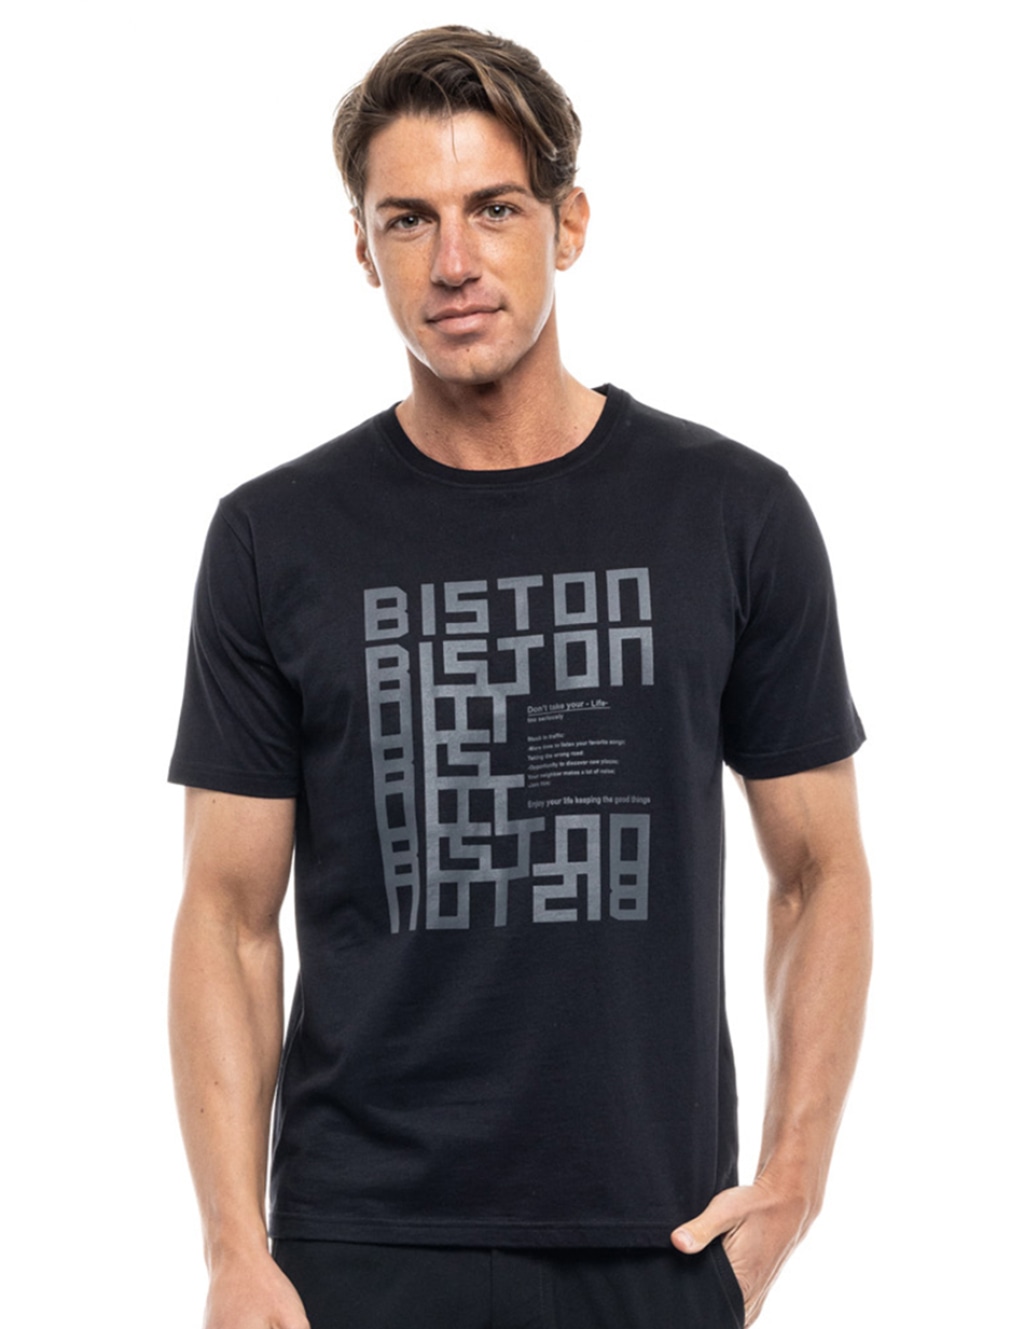 Biston fashion ανδρικό t-shirt ΜΑΥΡΟ 47-206-037-010-S